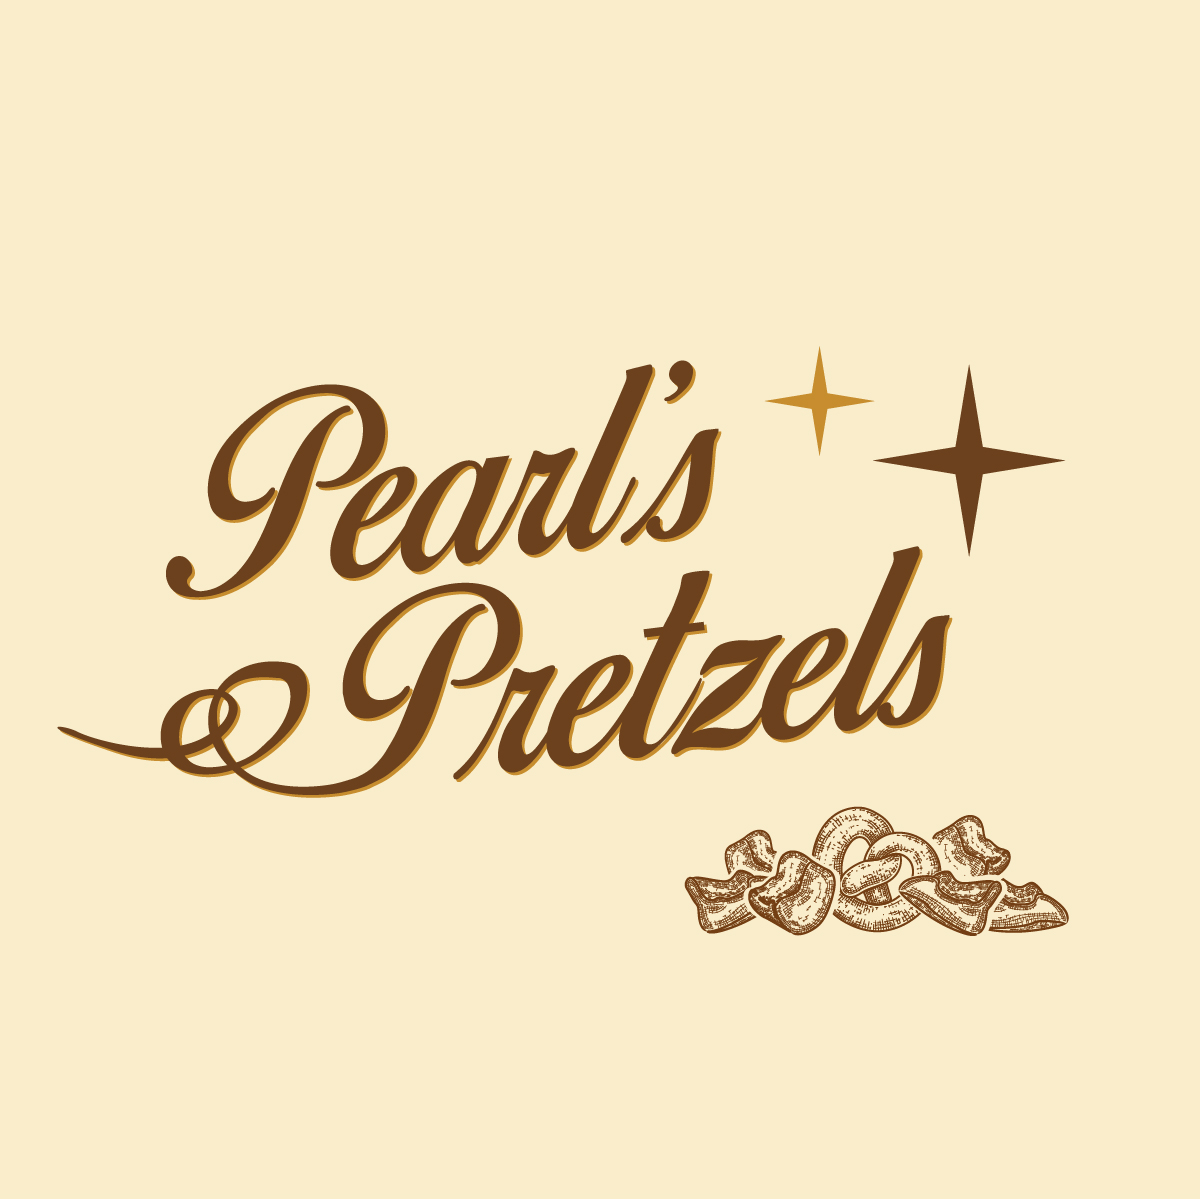 PearlsPretzels_01.jpg